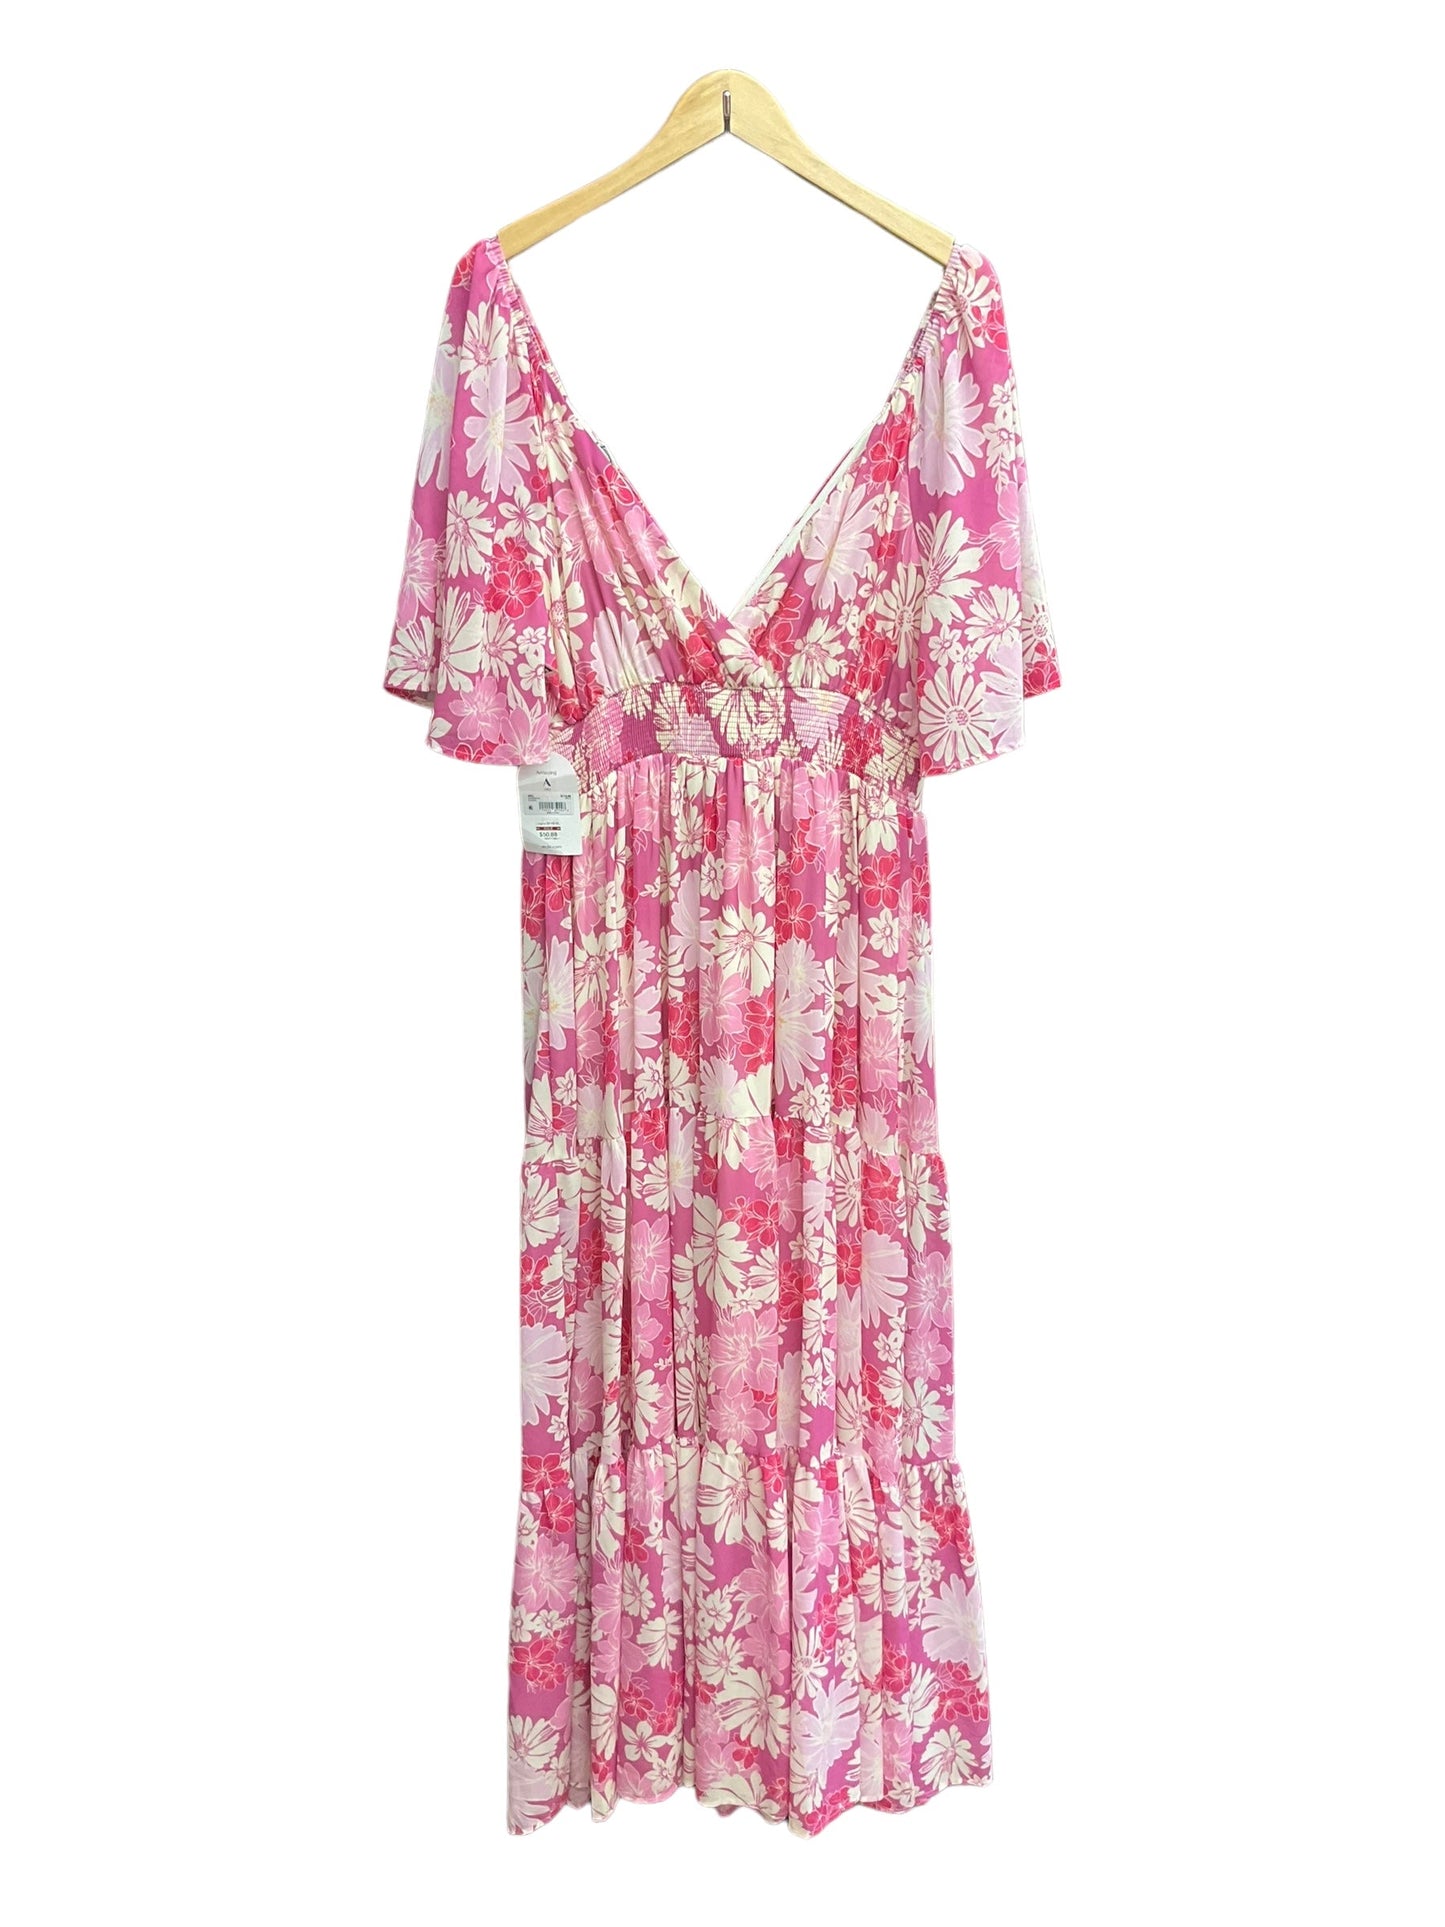 Floral Print Dress Casual Maxi Clothes Mentor, Size 1x